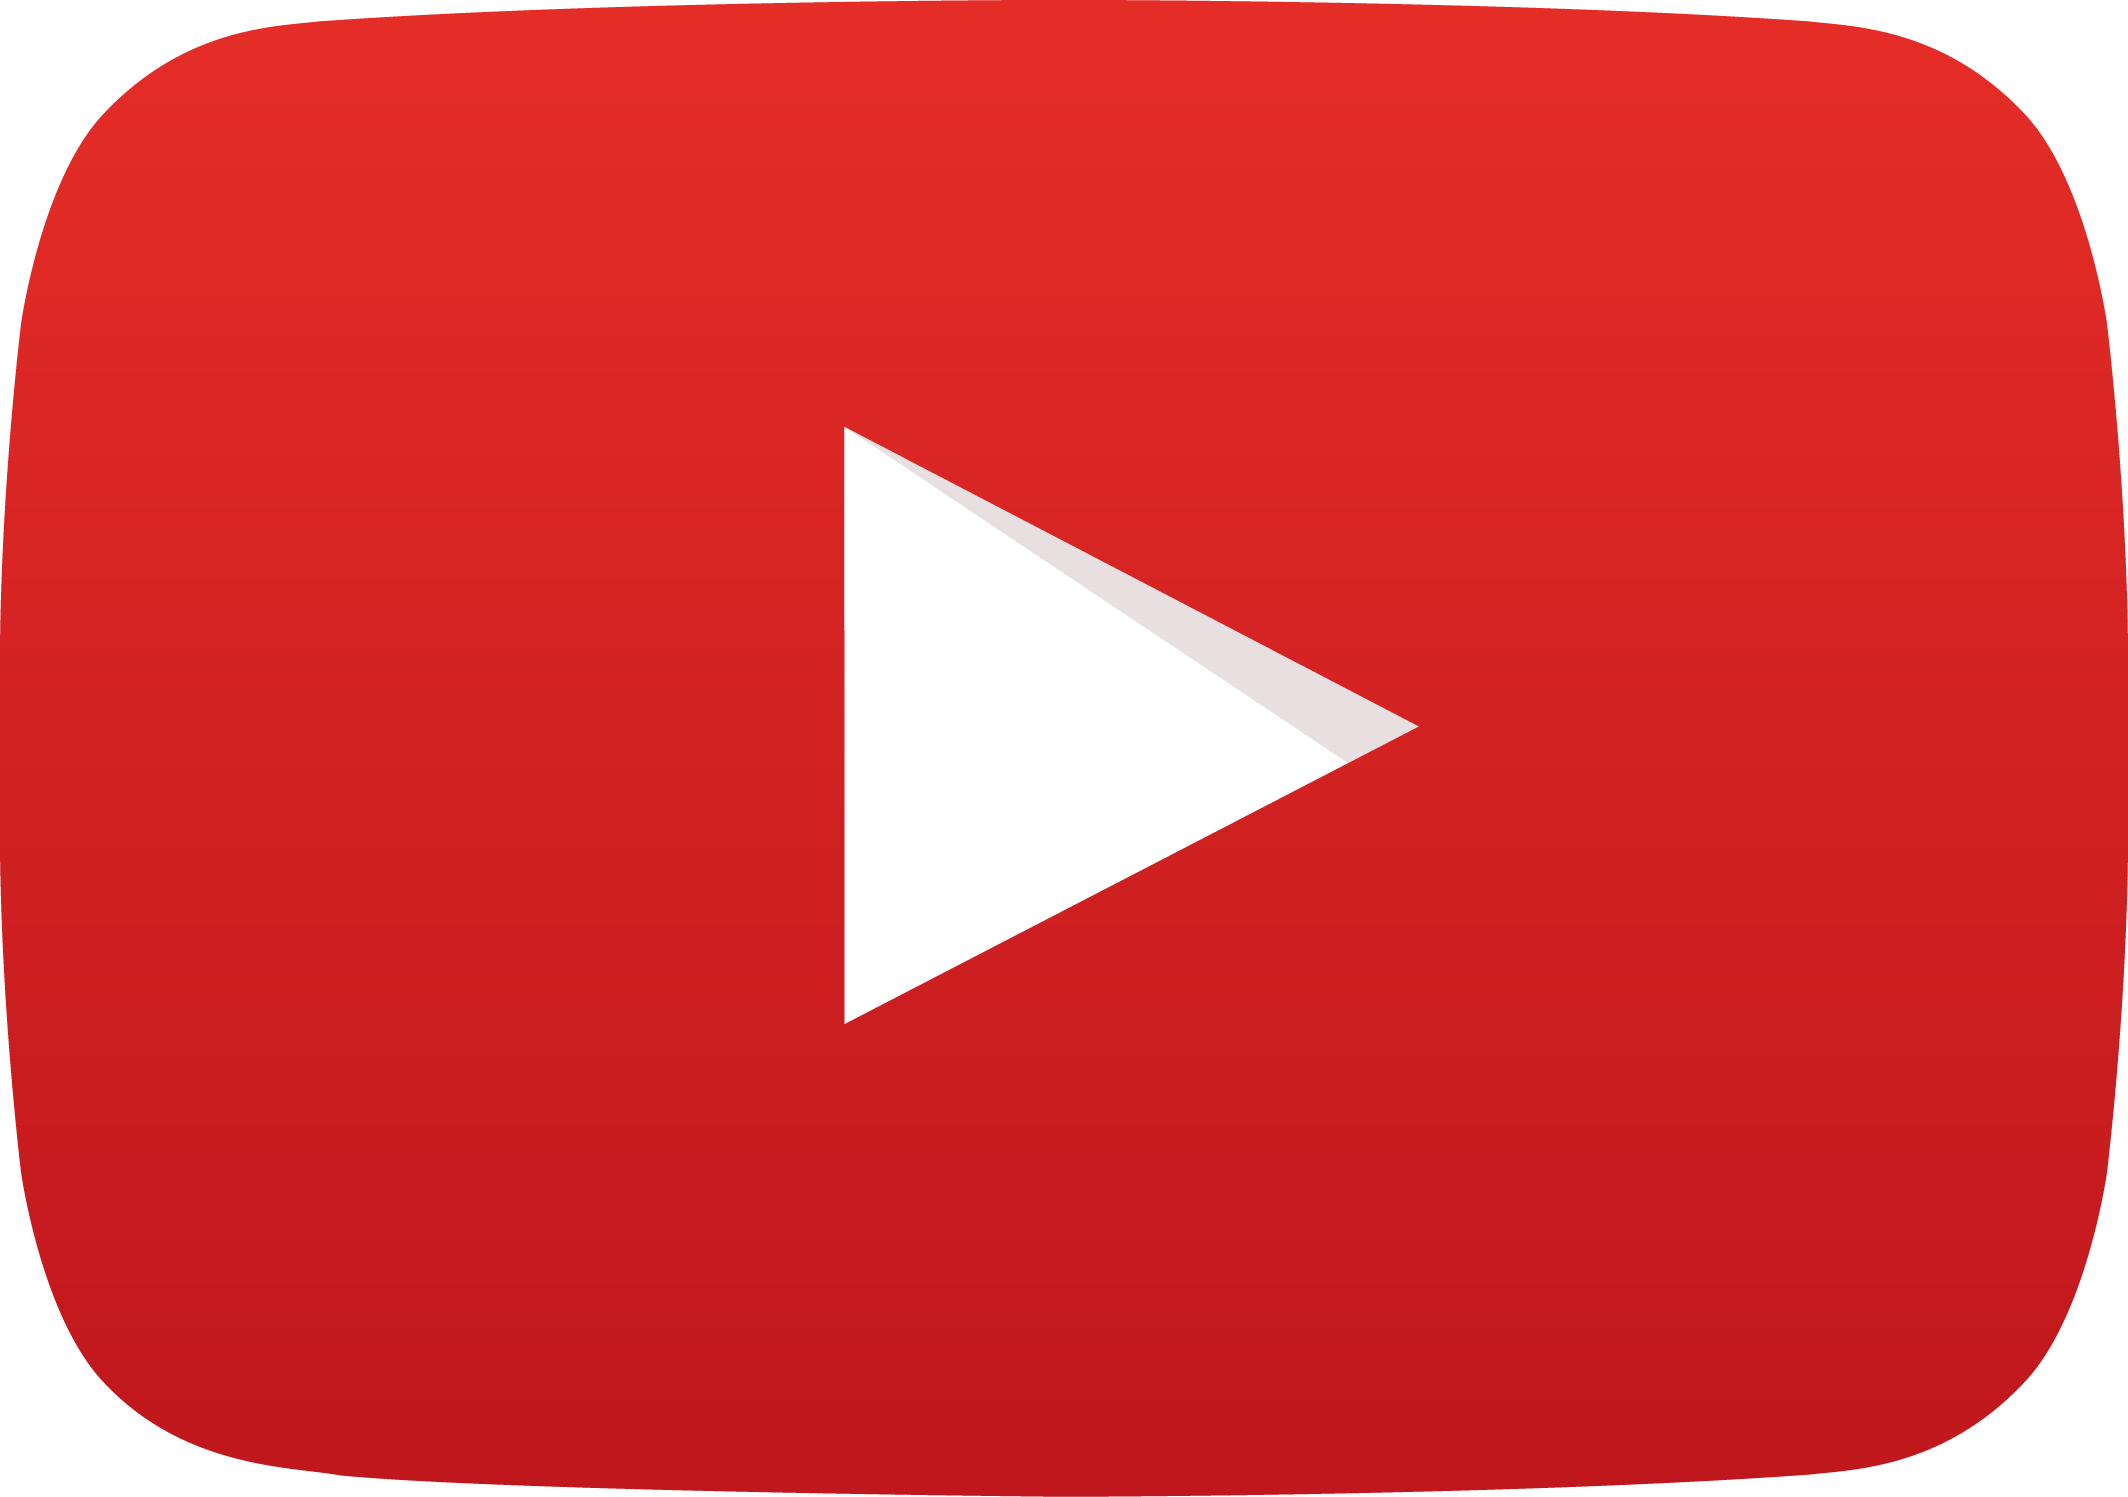 Logotipo do YouTube